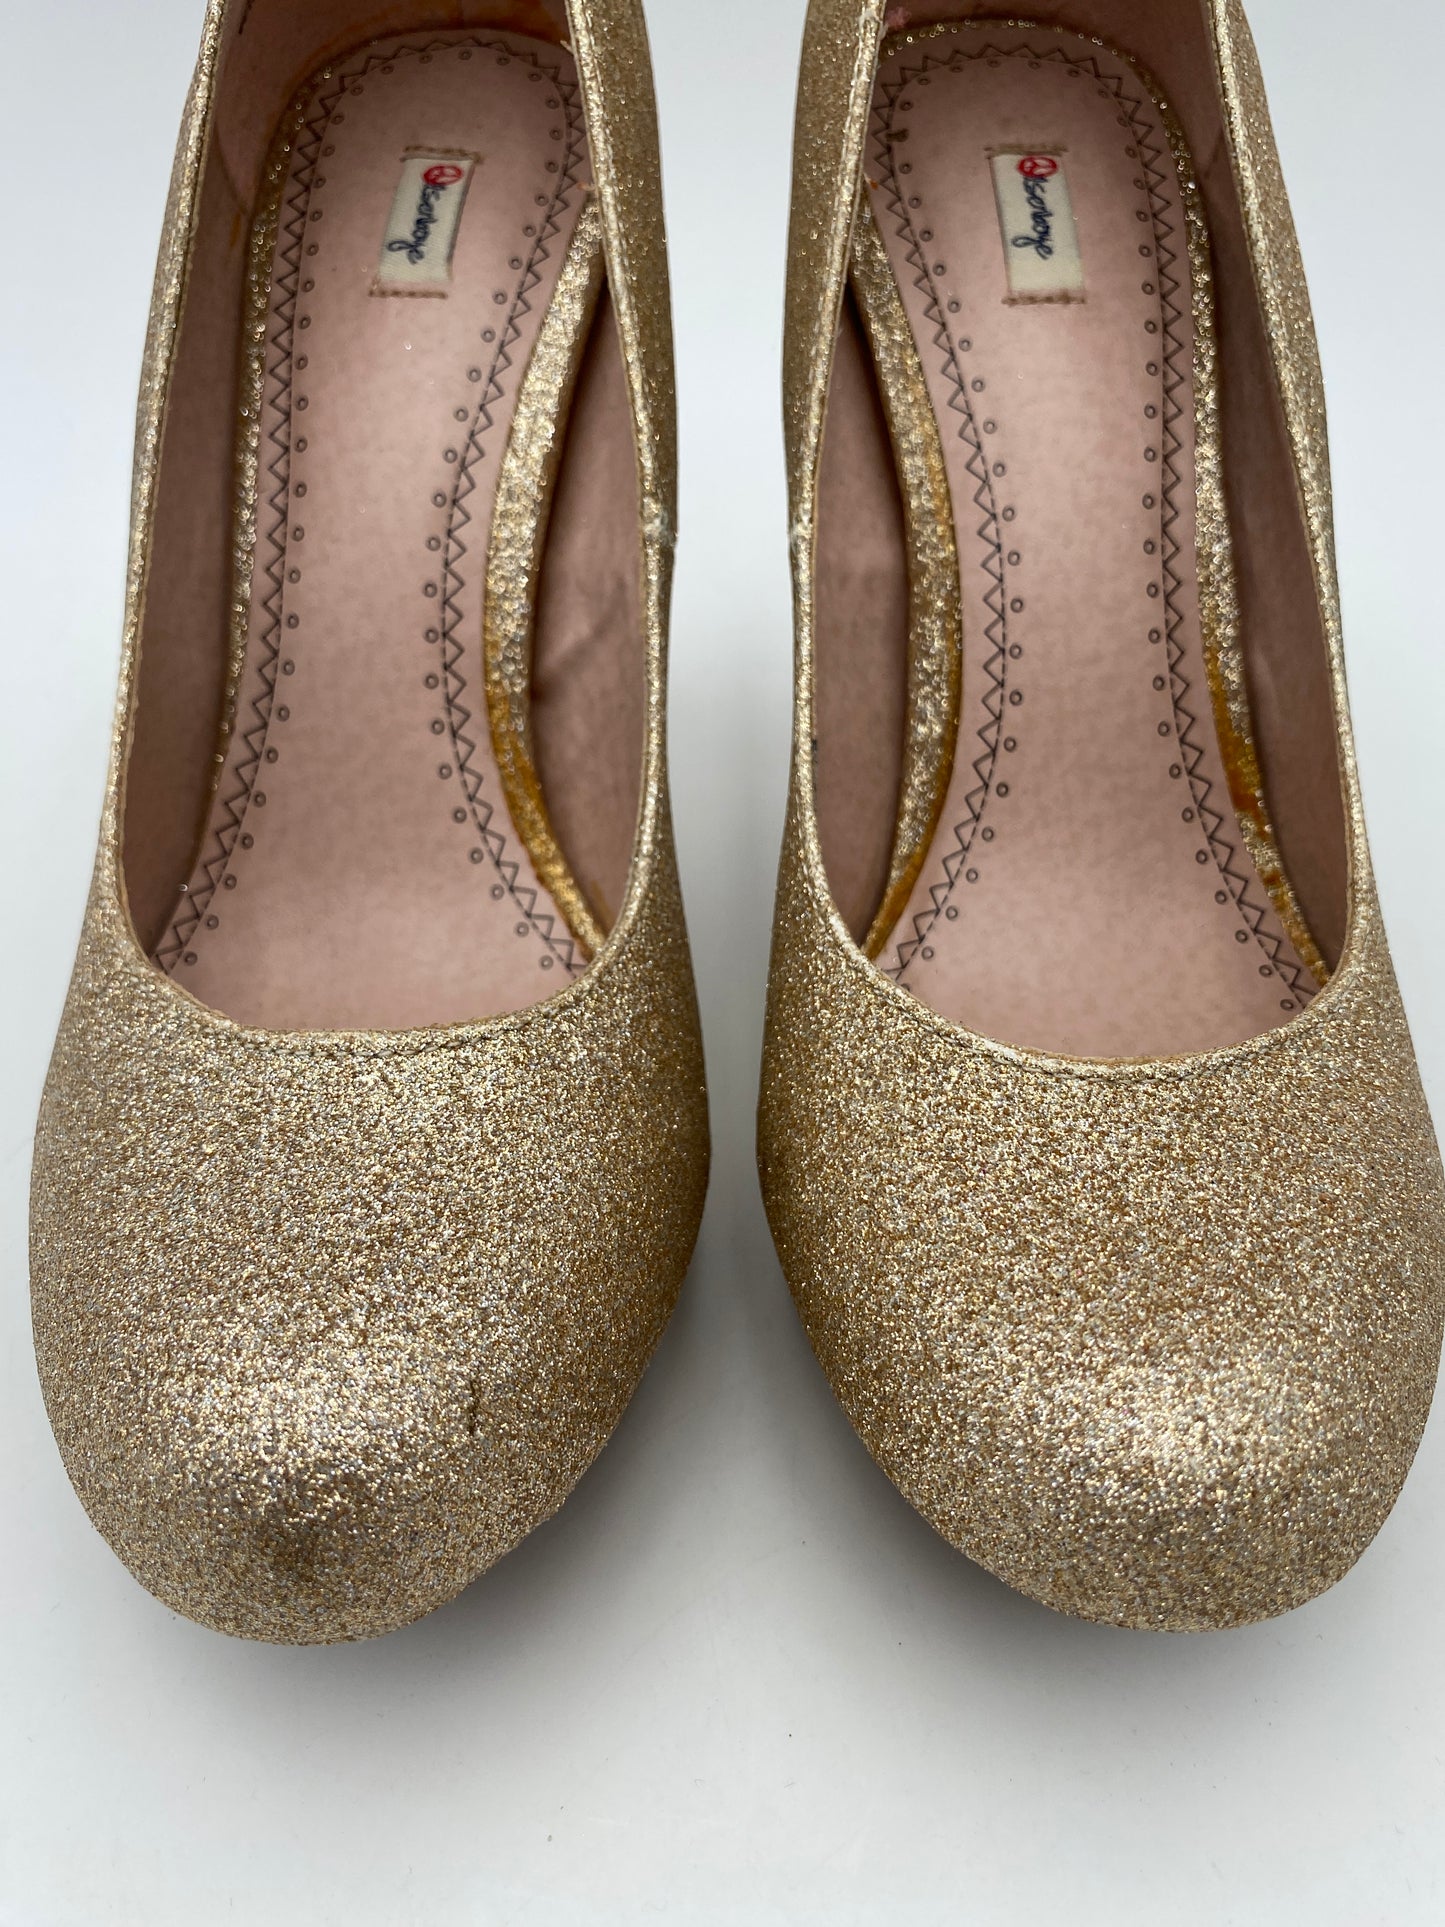 Olsenboye Size 7.5 M Gold Glitter OPepper Platform Pumps, 4.5" heel